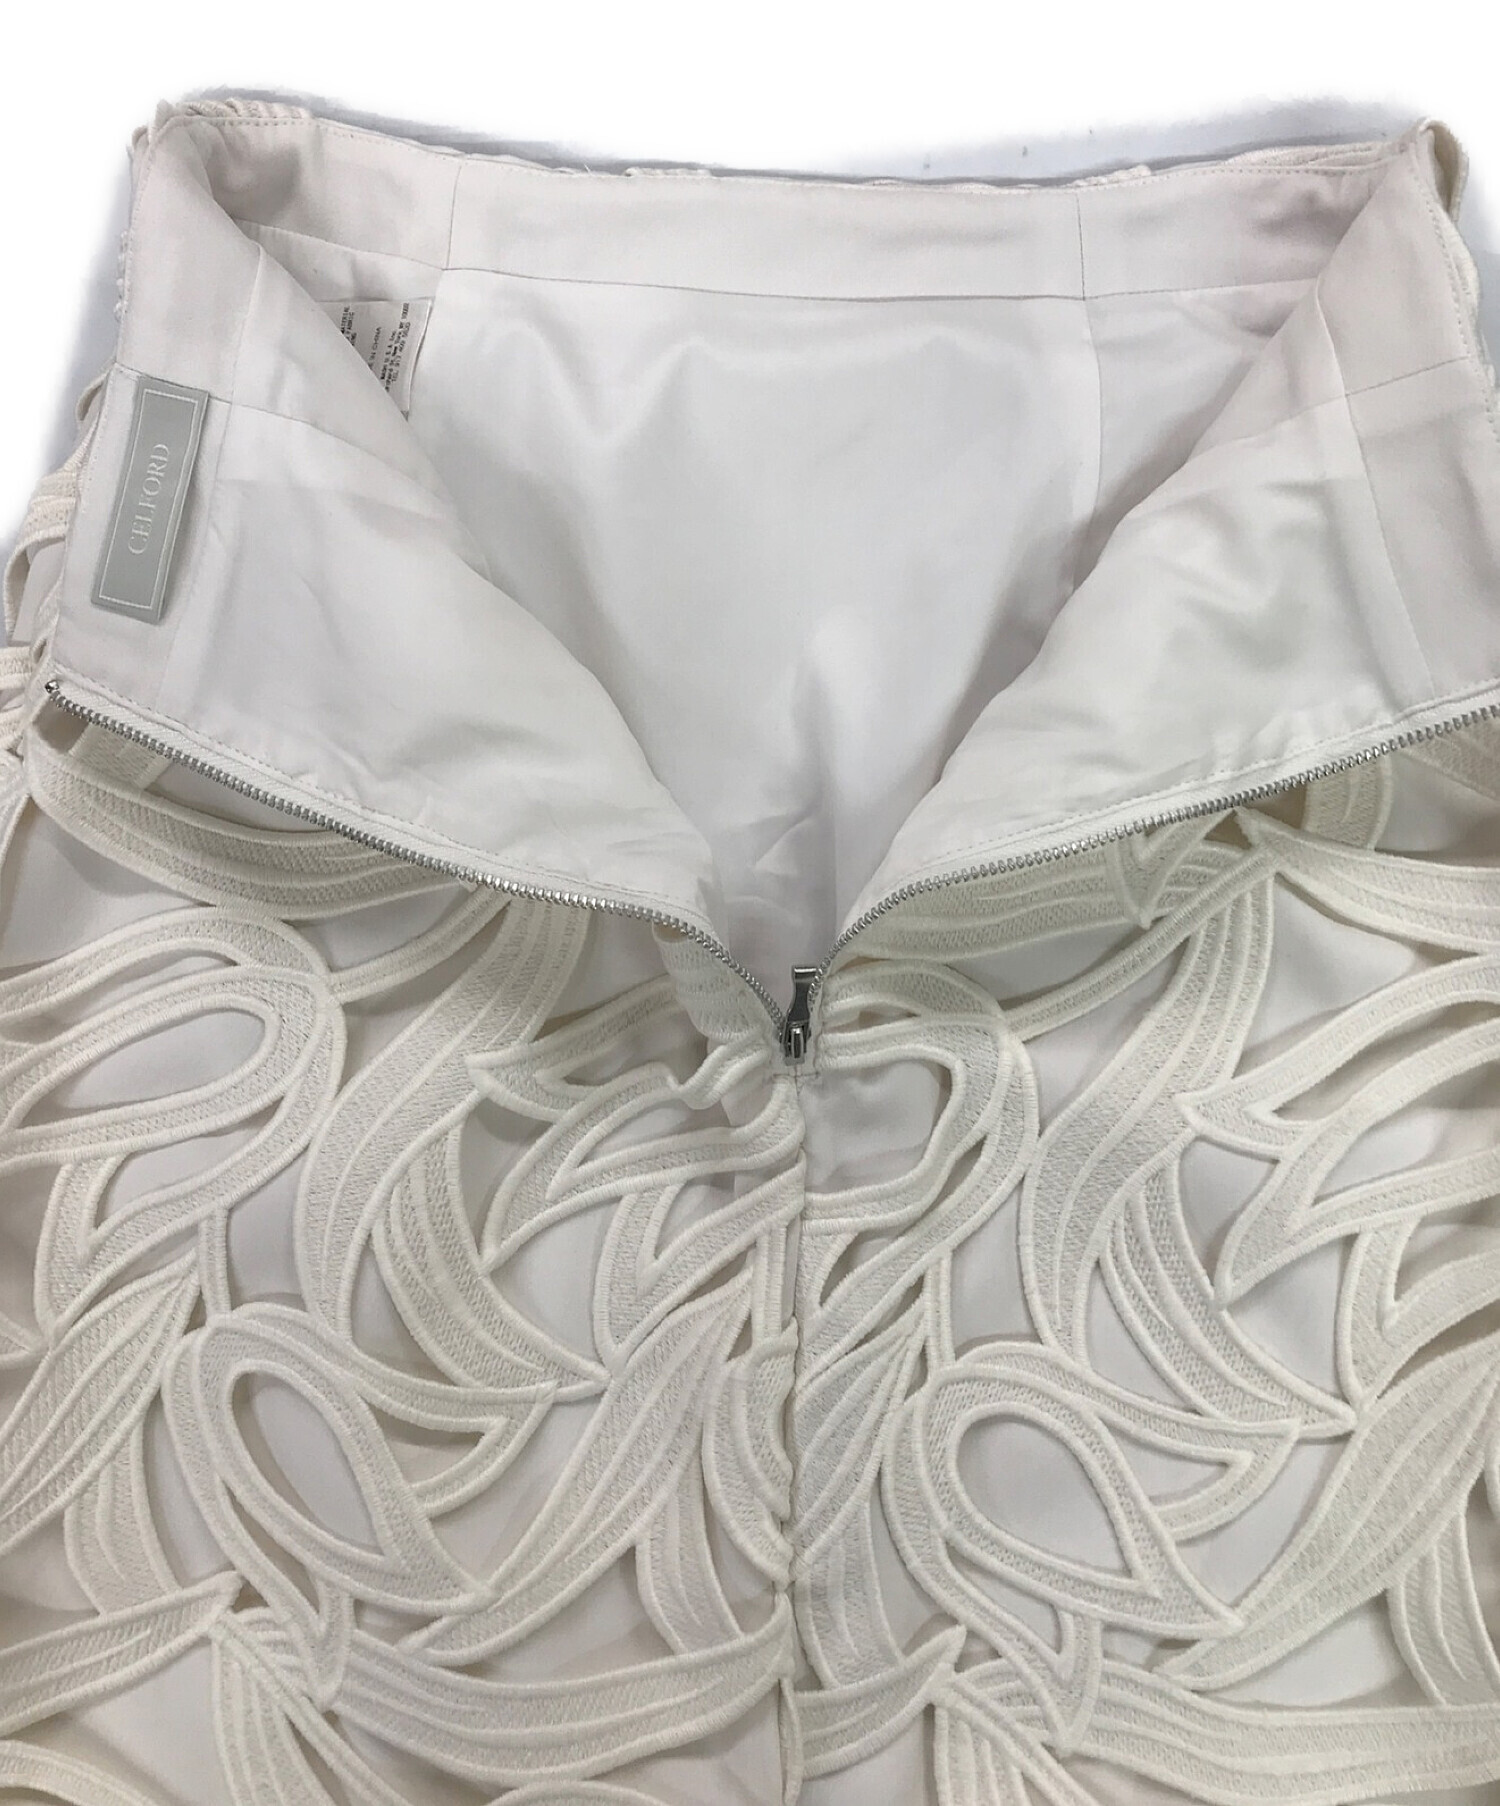 【CELFORD】チューリップレーススカート ホワイト 38サイズウエスト32cm